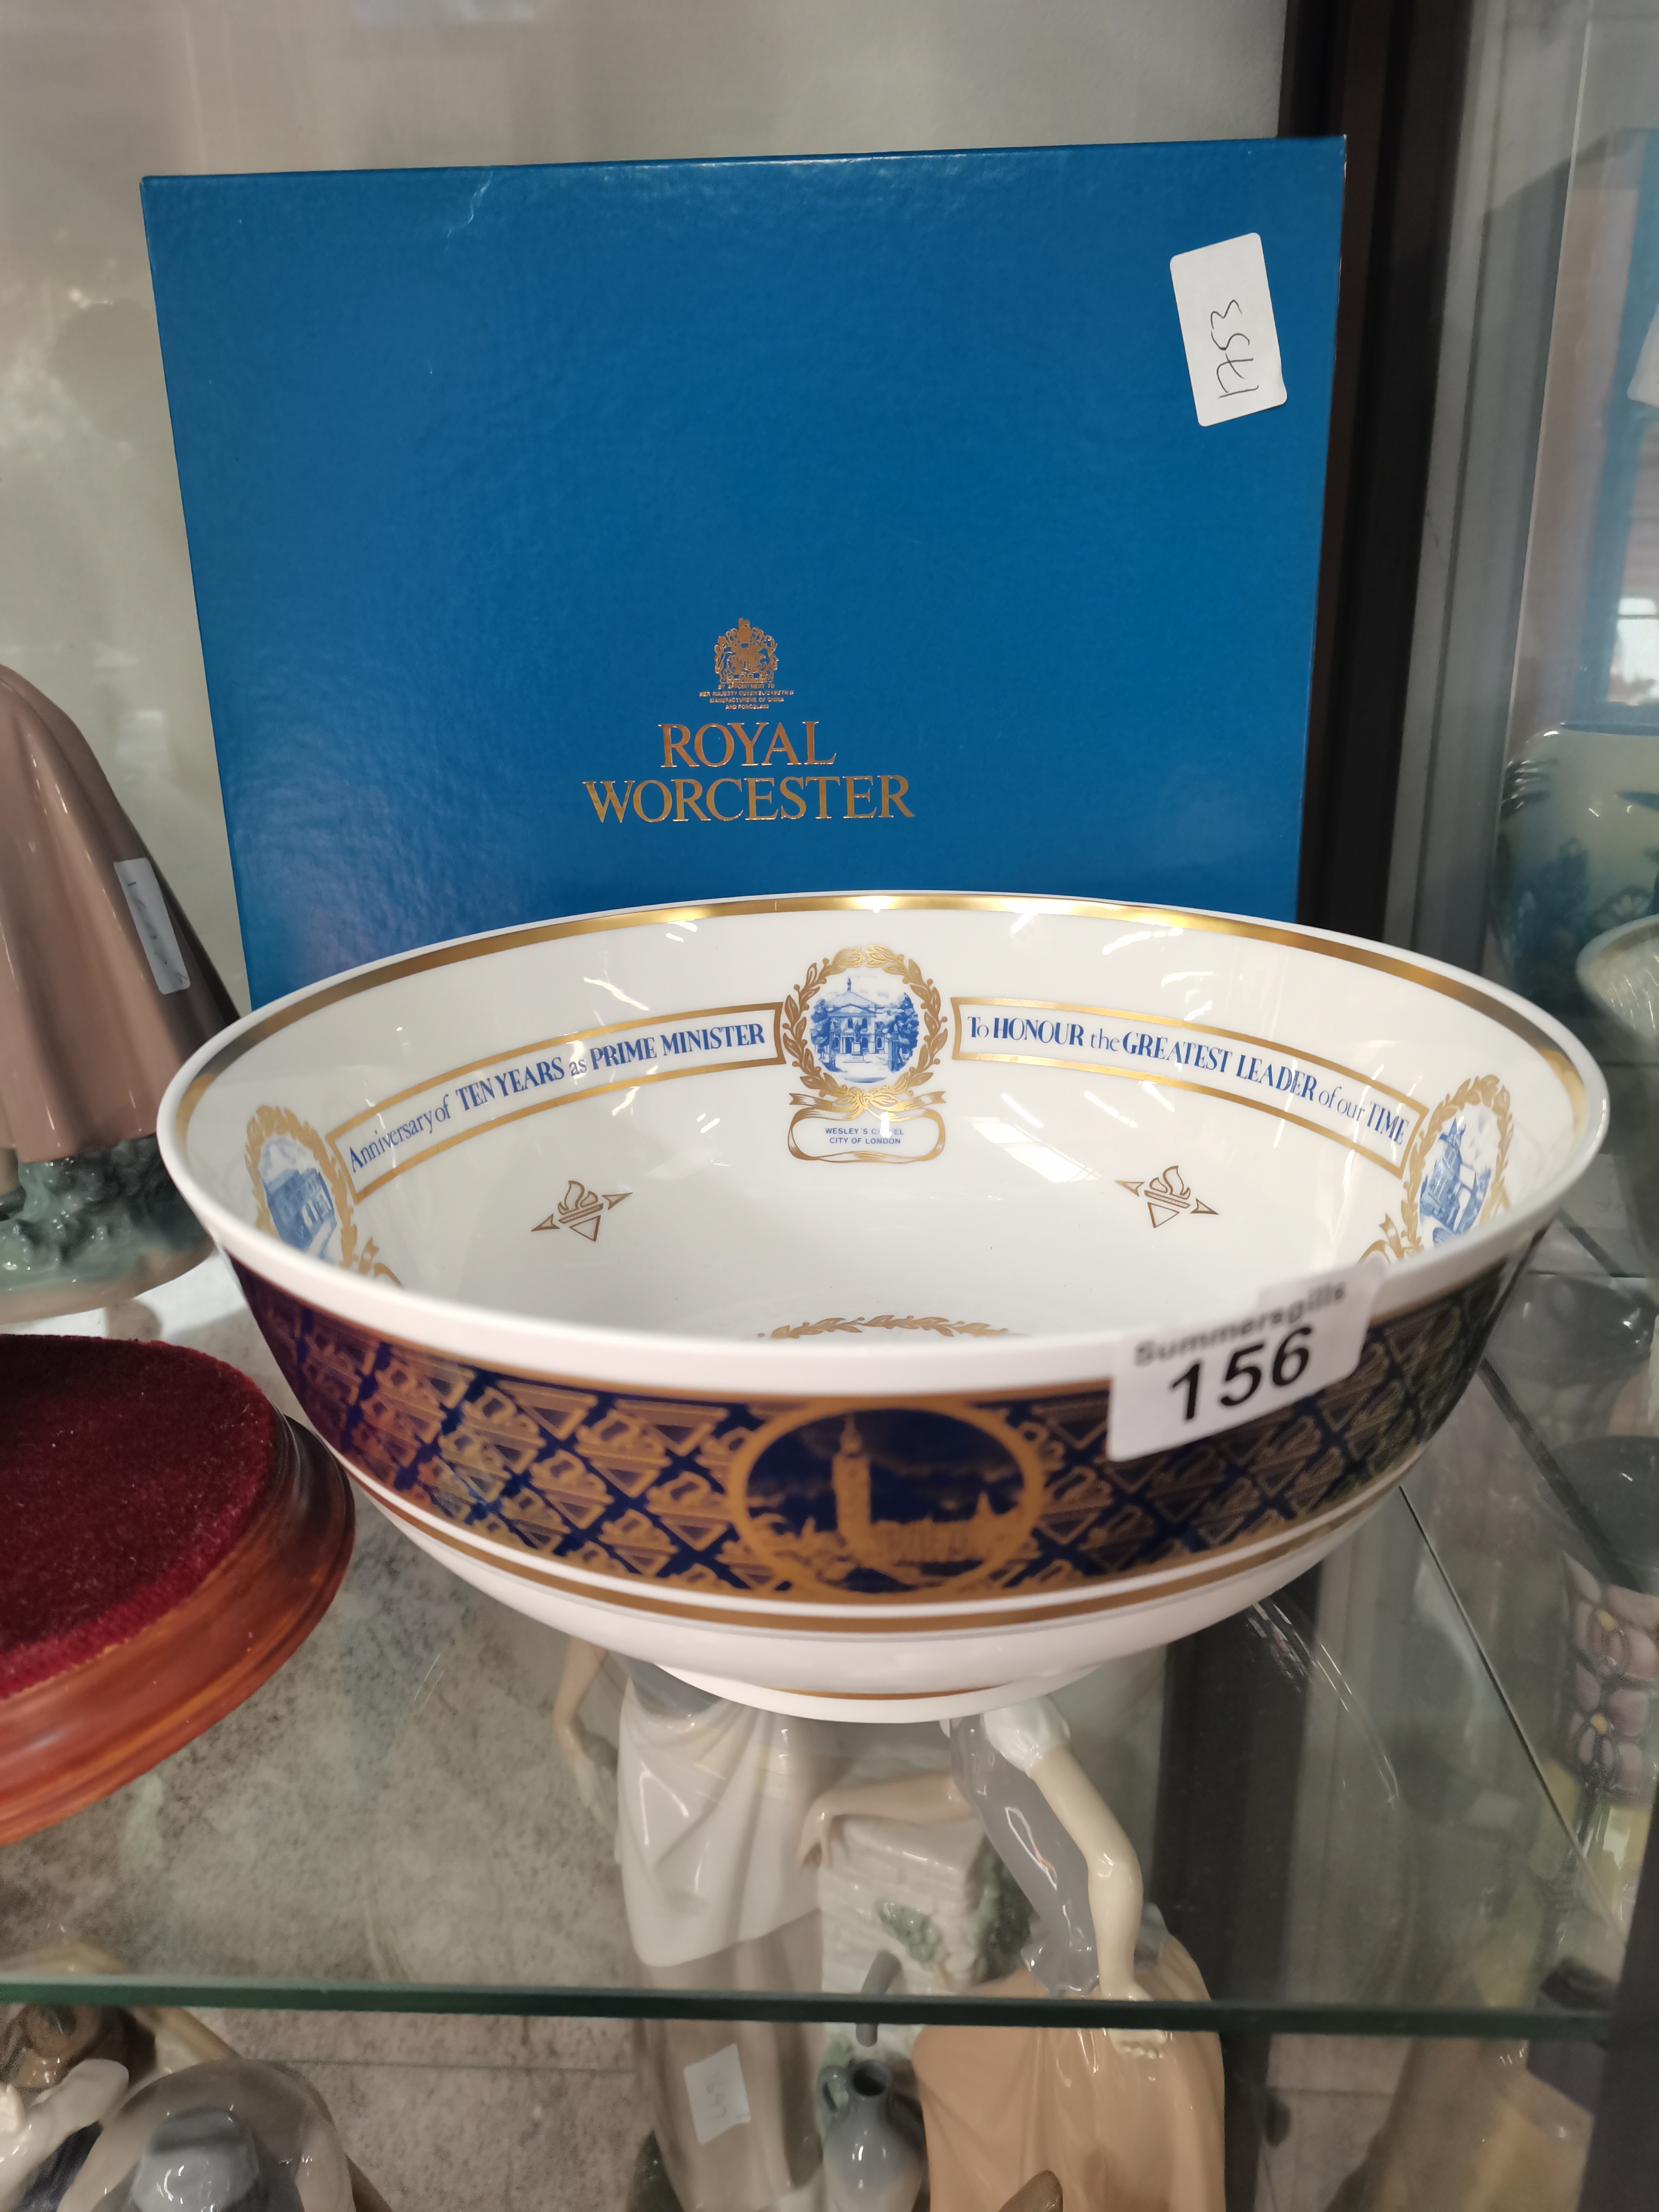 Royal Worcester commemorative bowl